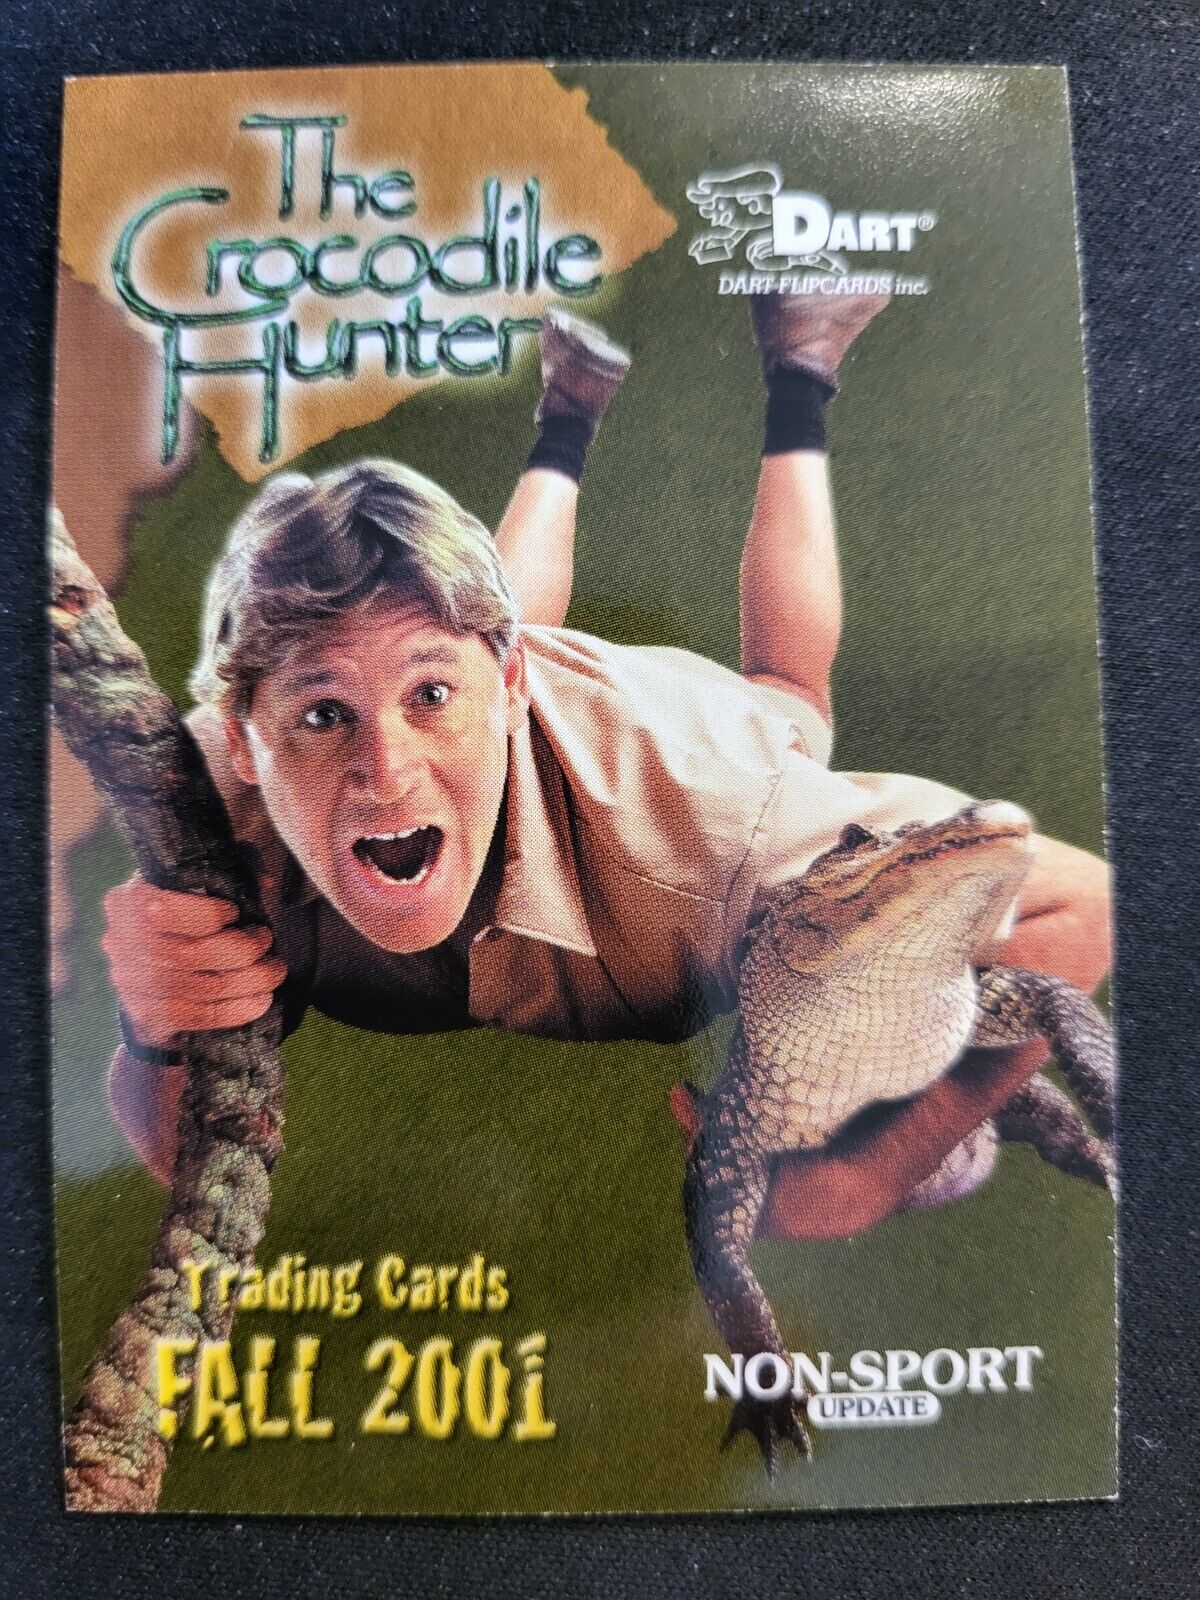 Crocodile Hunter Steve Terri Irwin Promo Card Dart Animal Planet Non Sport 2001 